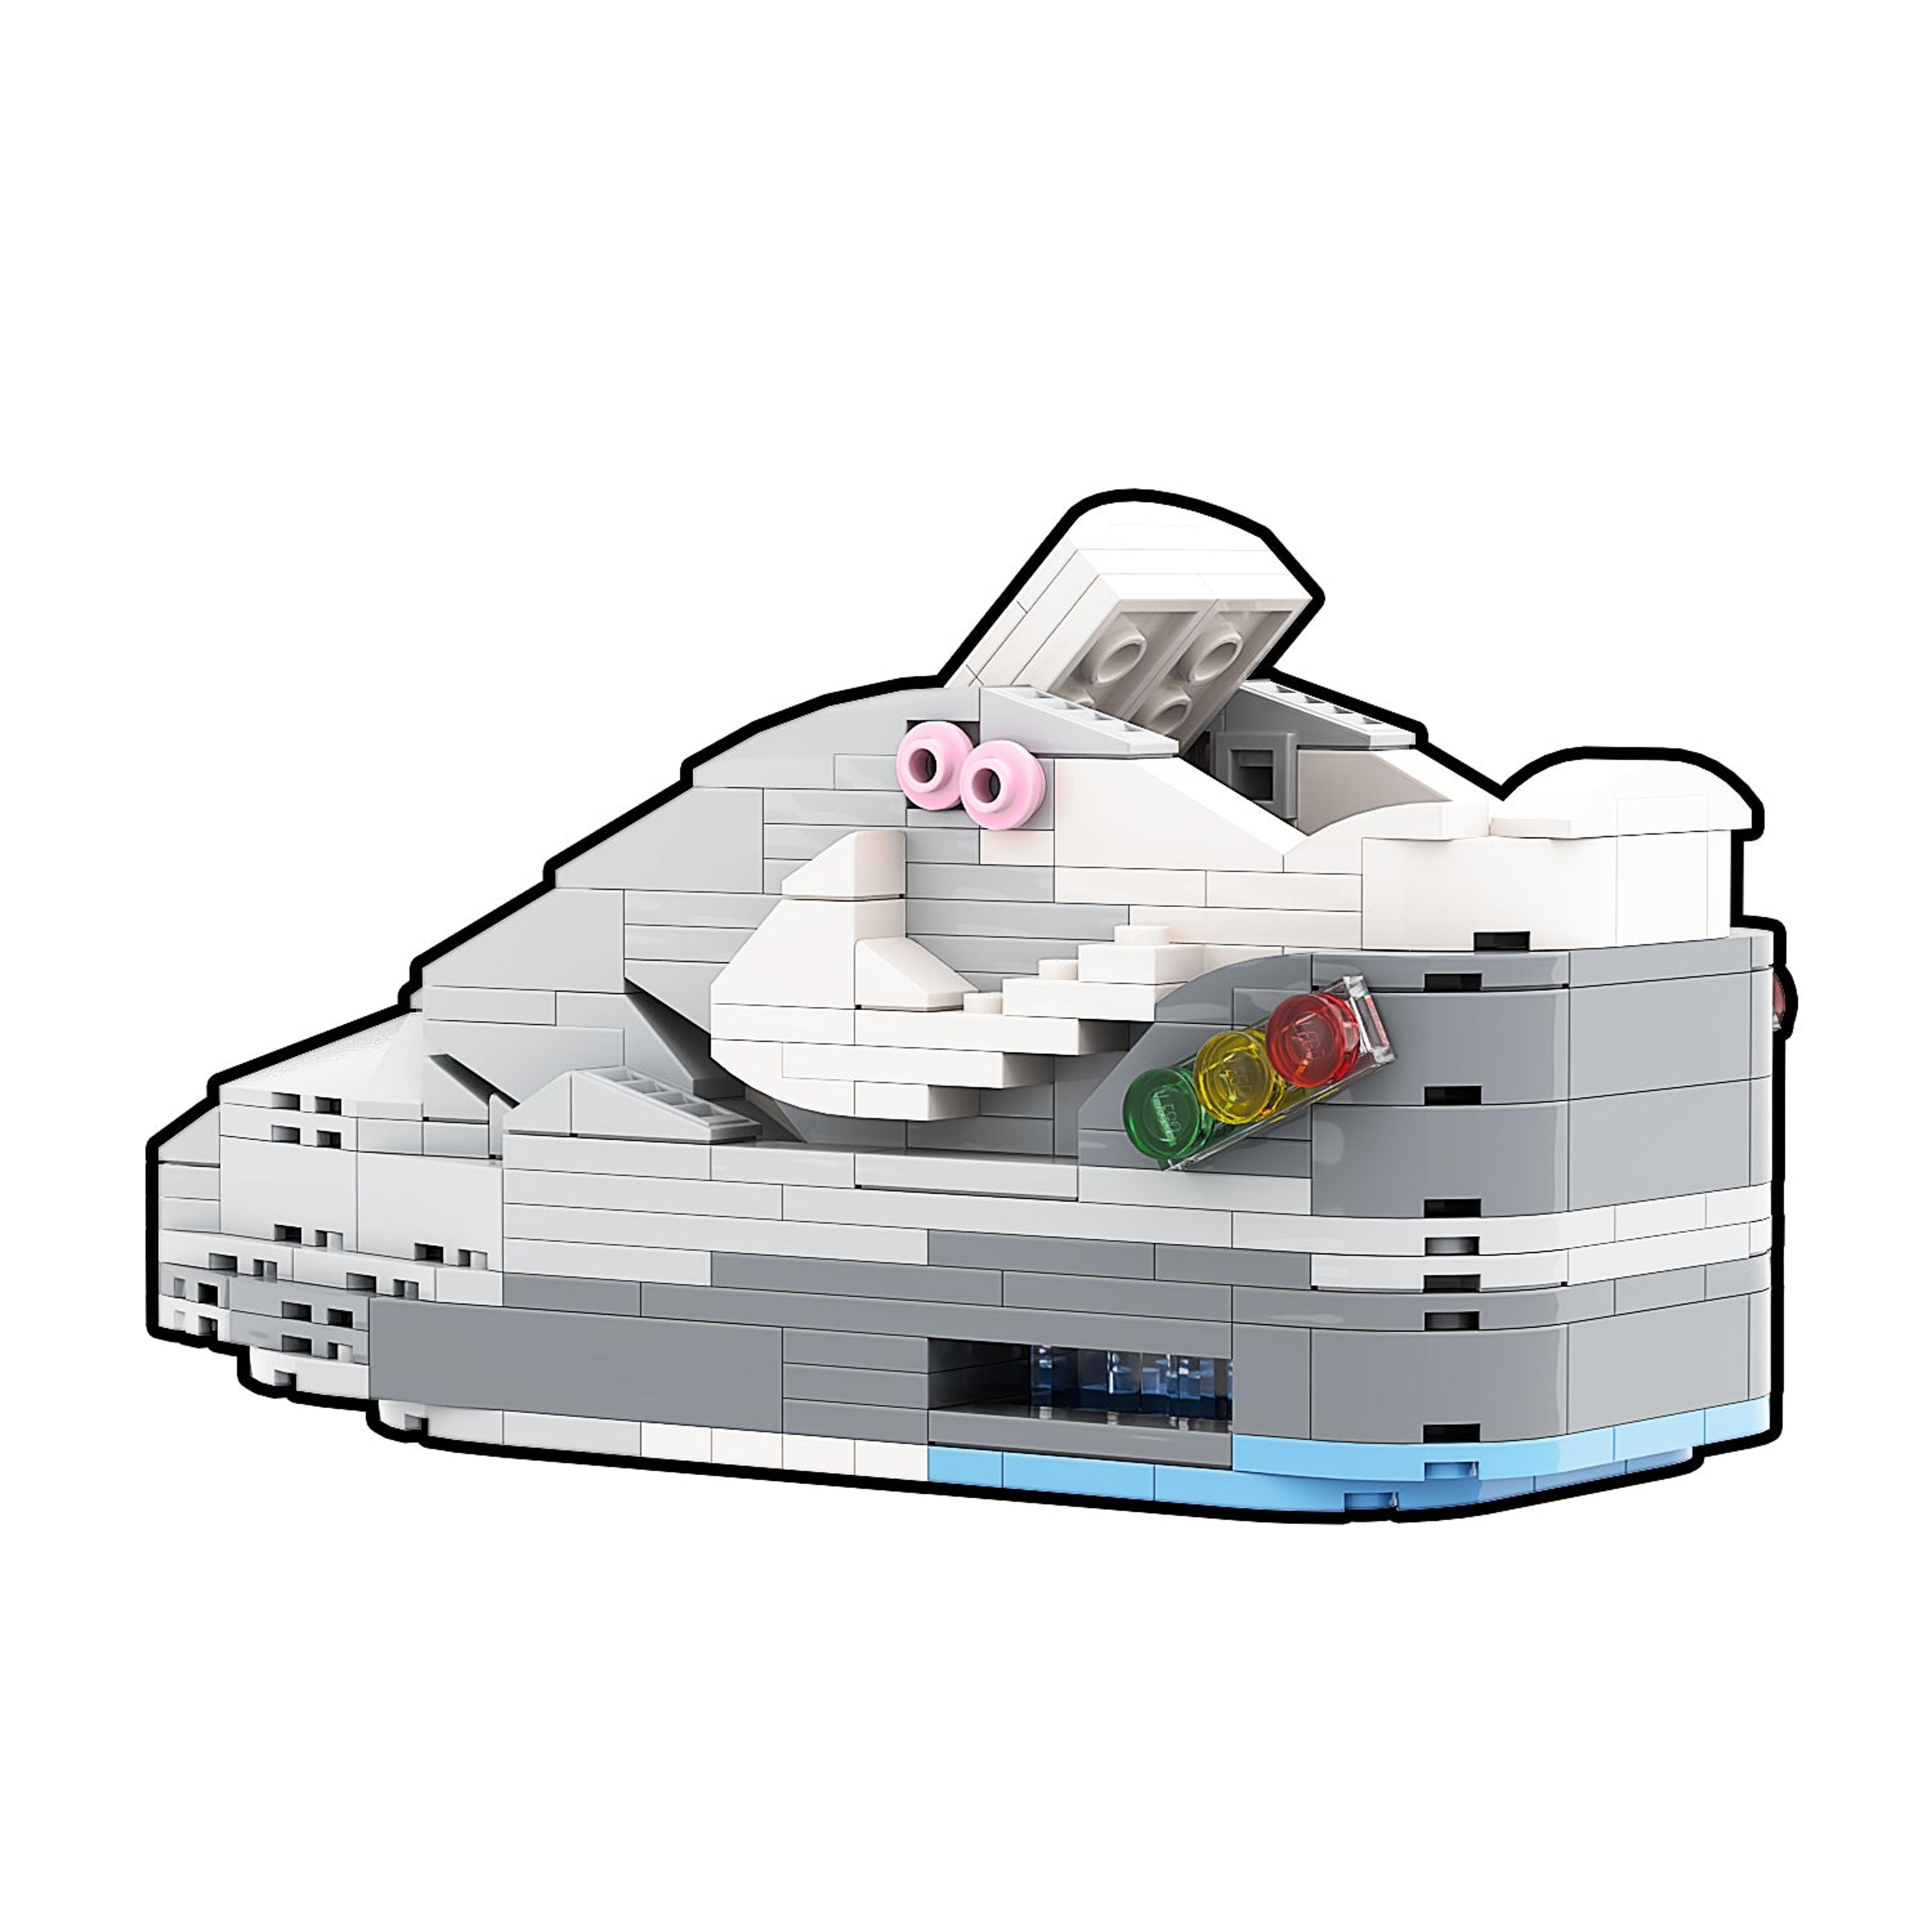 Alternate View 13 of REGULAR Air Max 1 "Mags MOC" Sneaker Bricks with Mini Figure